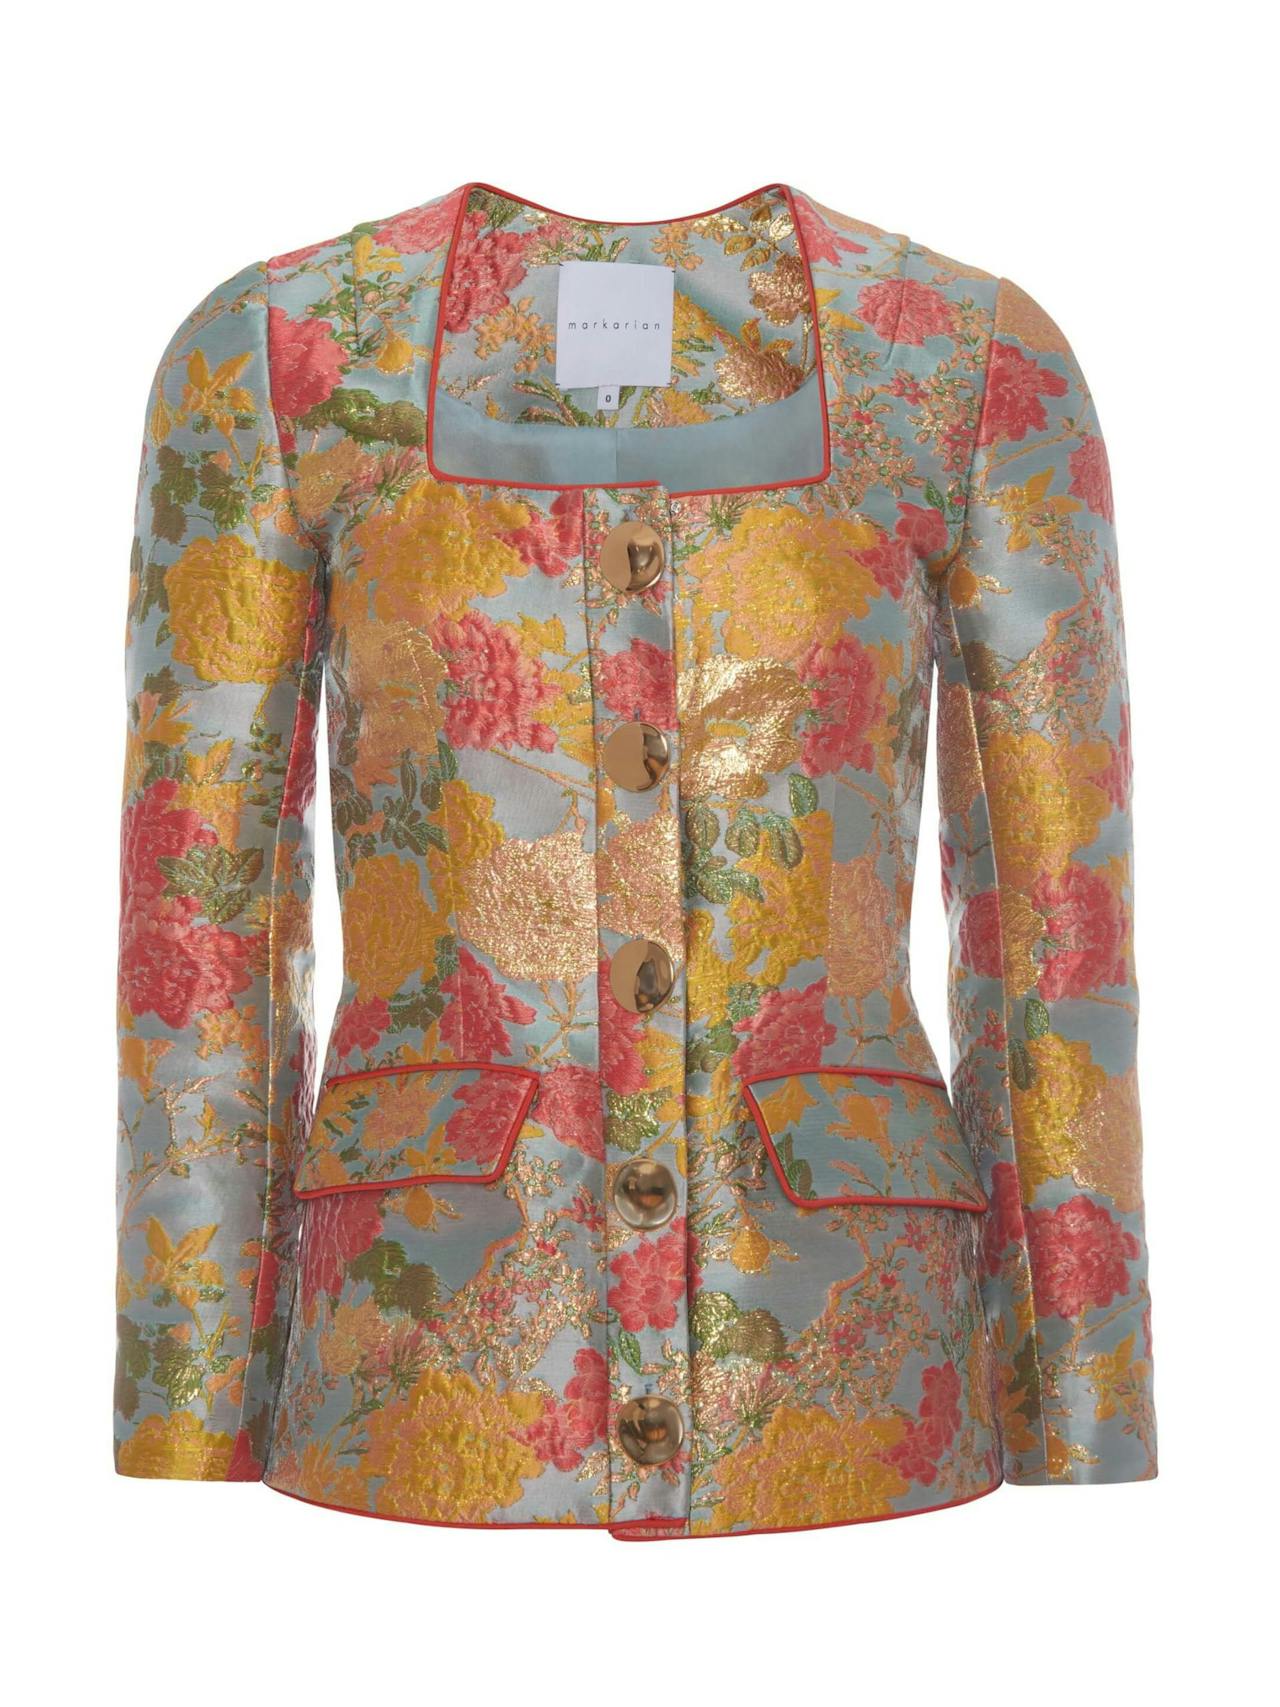 Chiara floral jacquard jacket